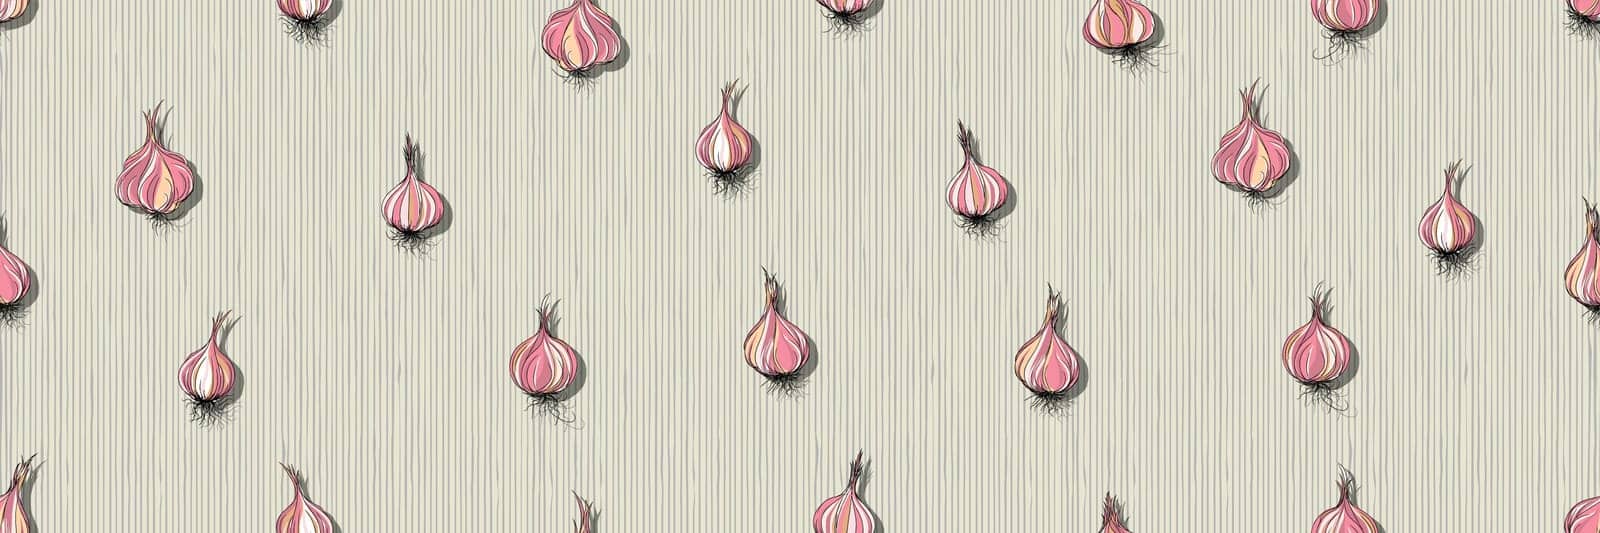 Hand drawn Garlic seamless pattern, vector illustration